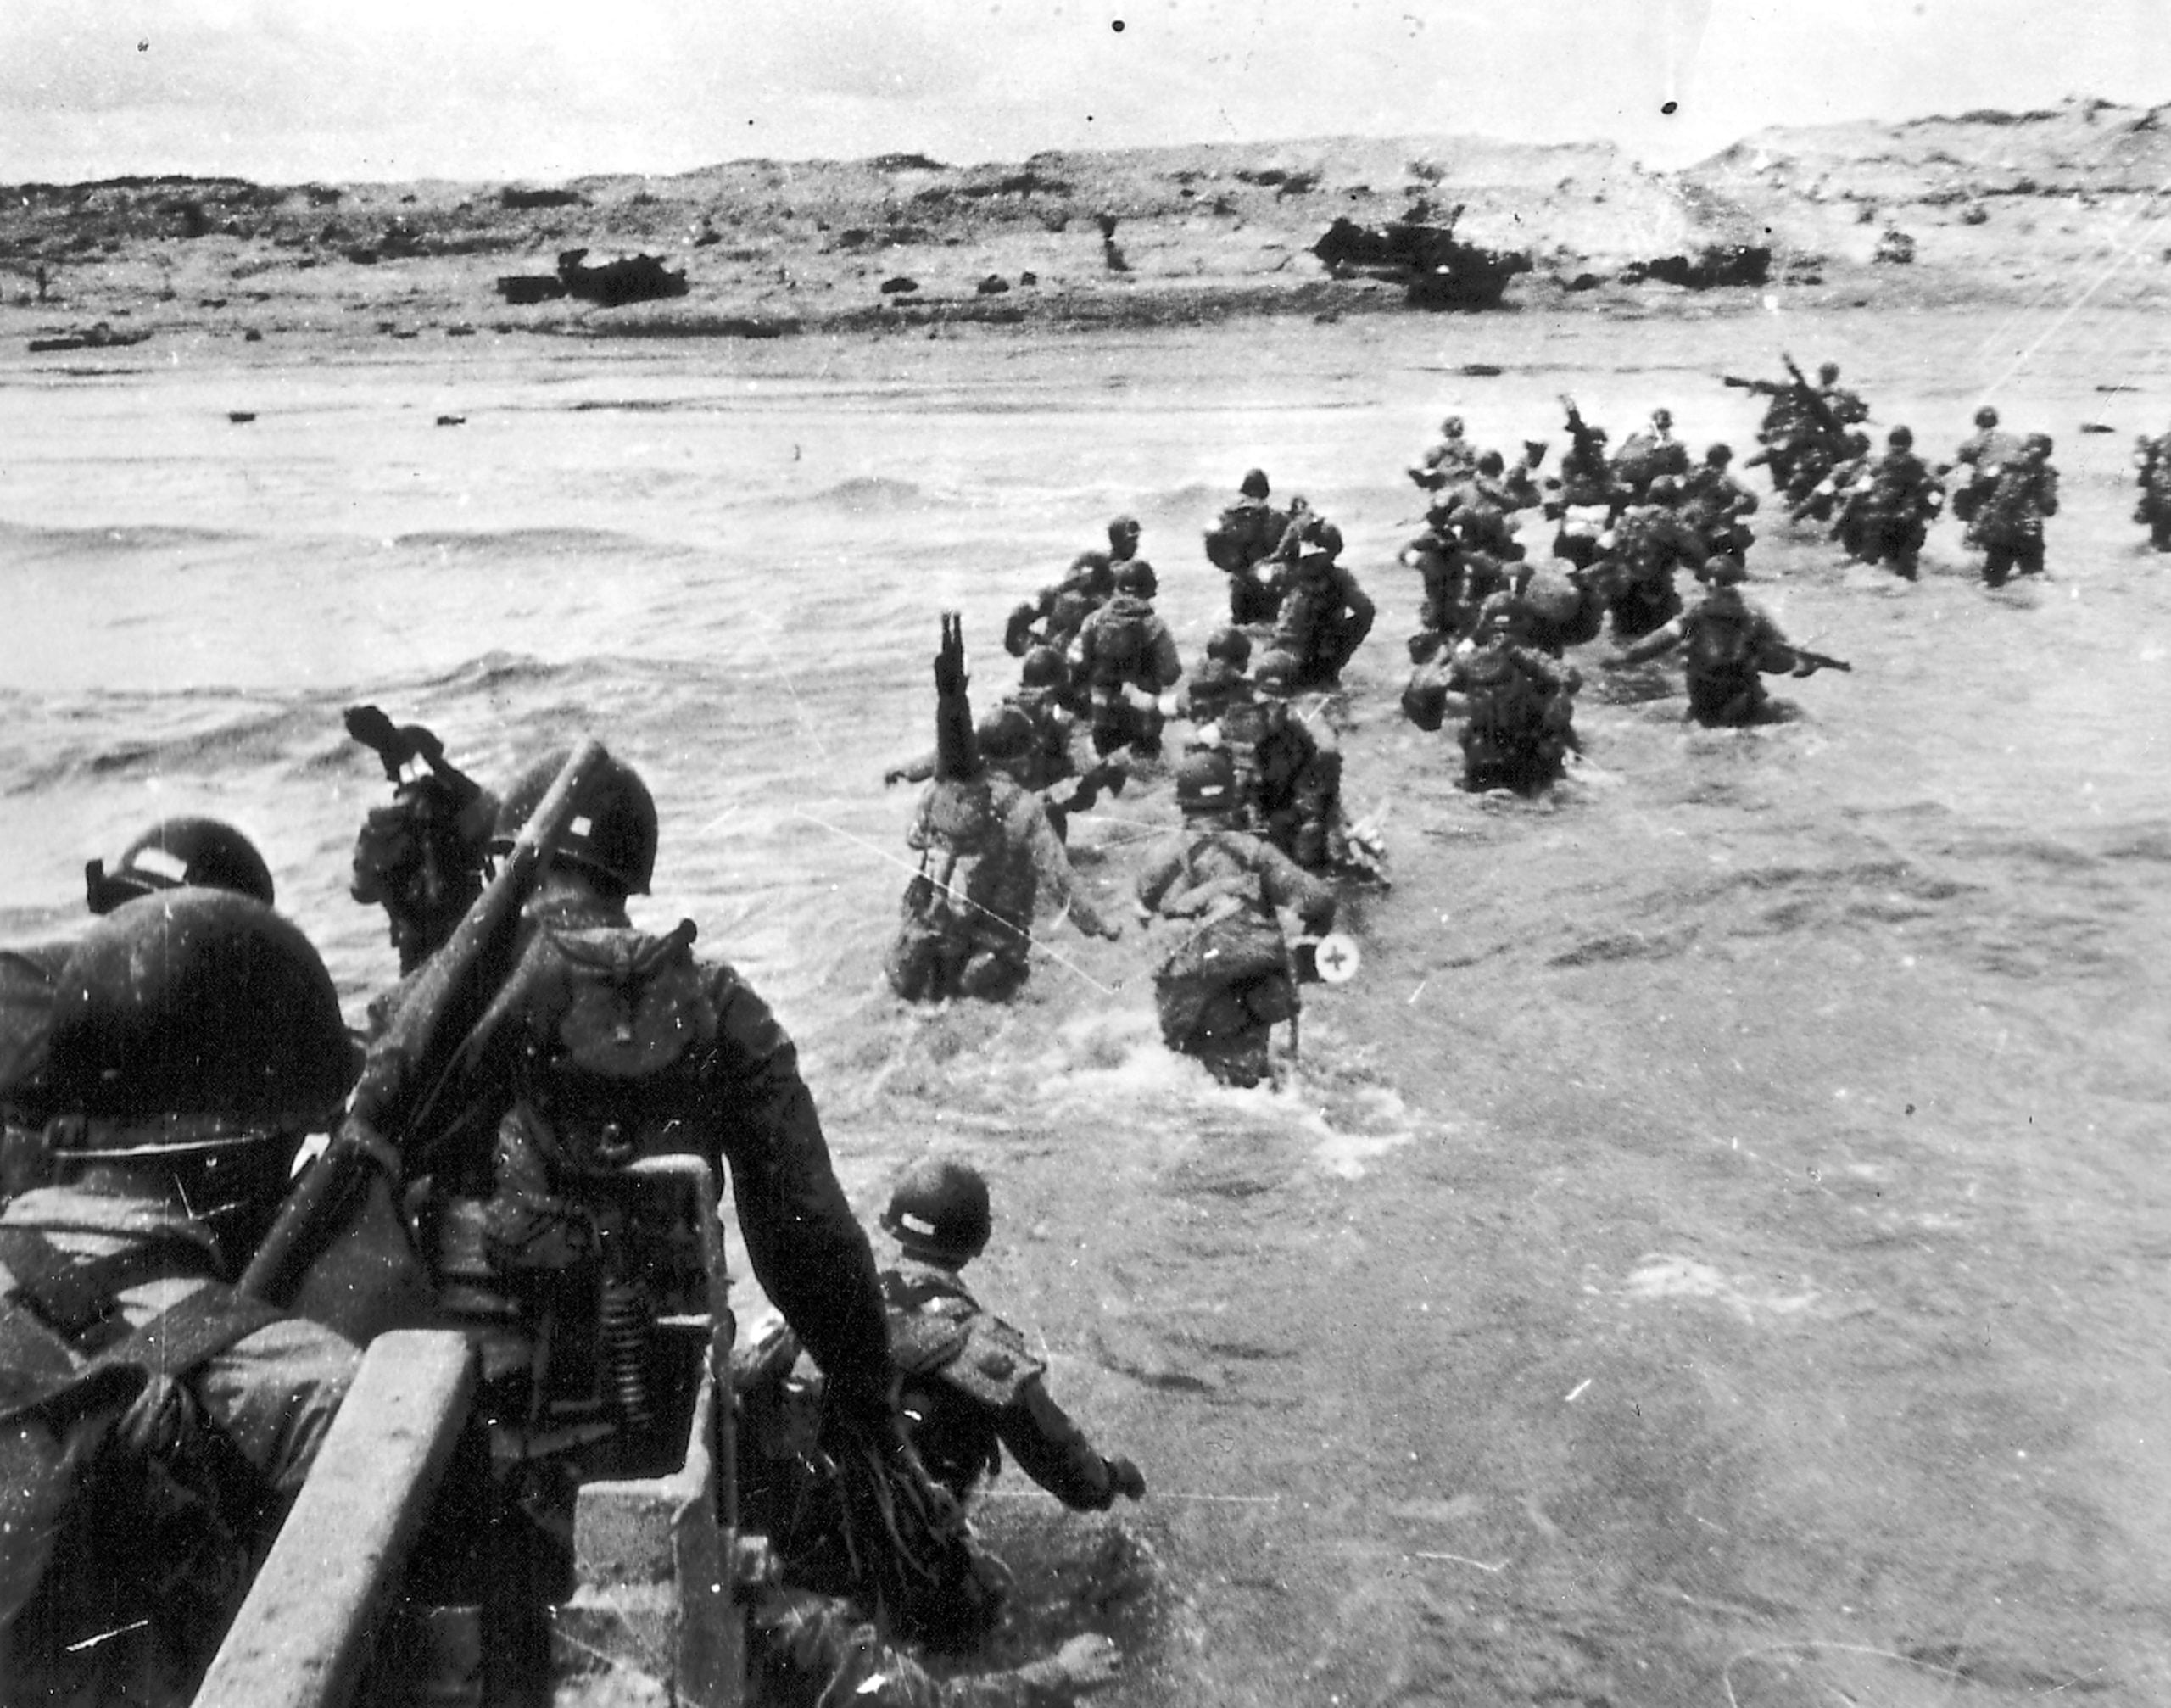 WWII soldiers wade through waist deep ocean water towards a shortline